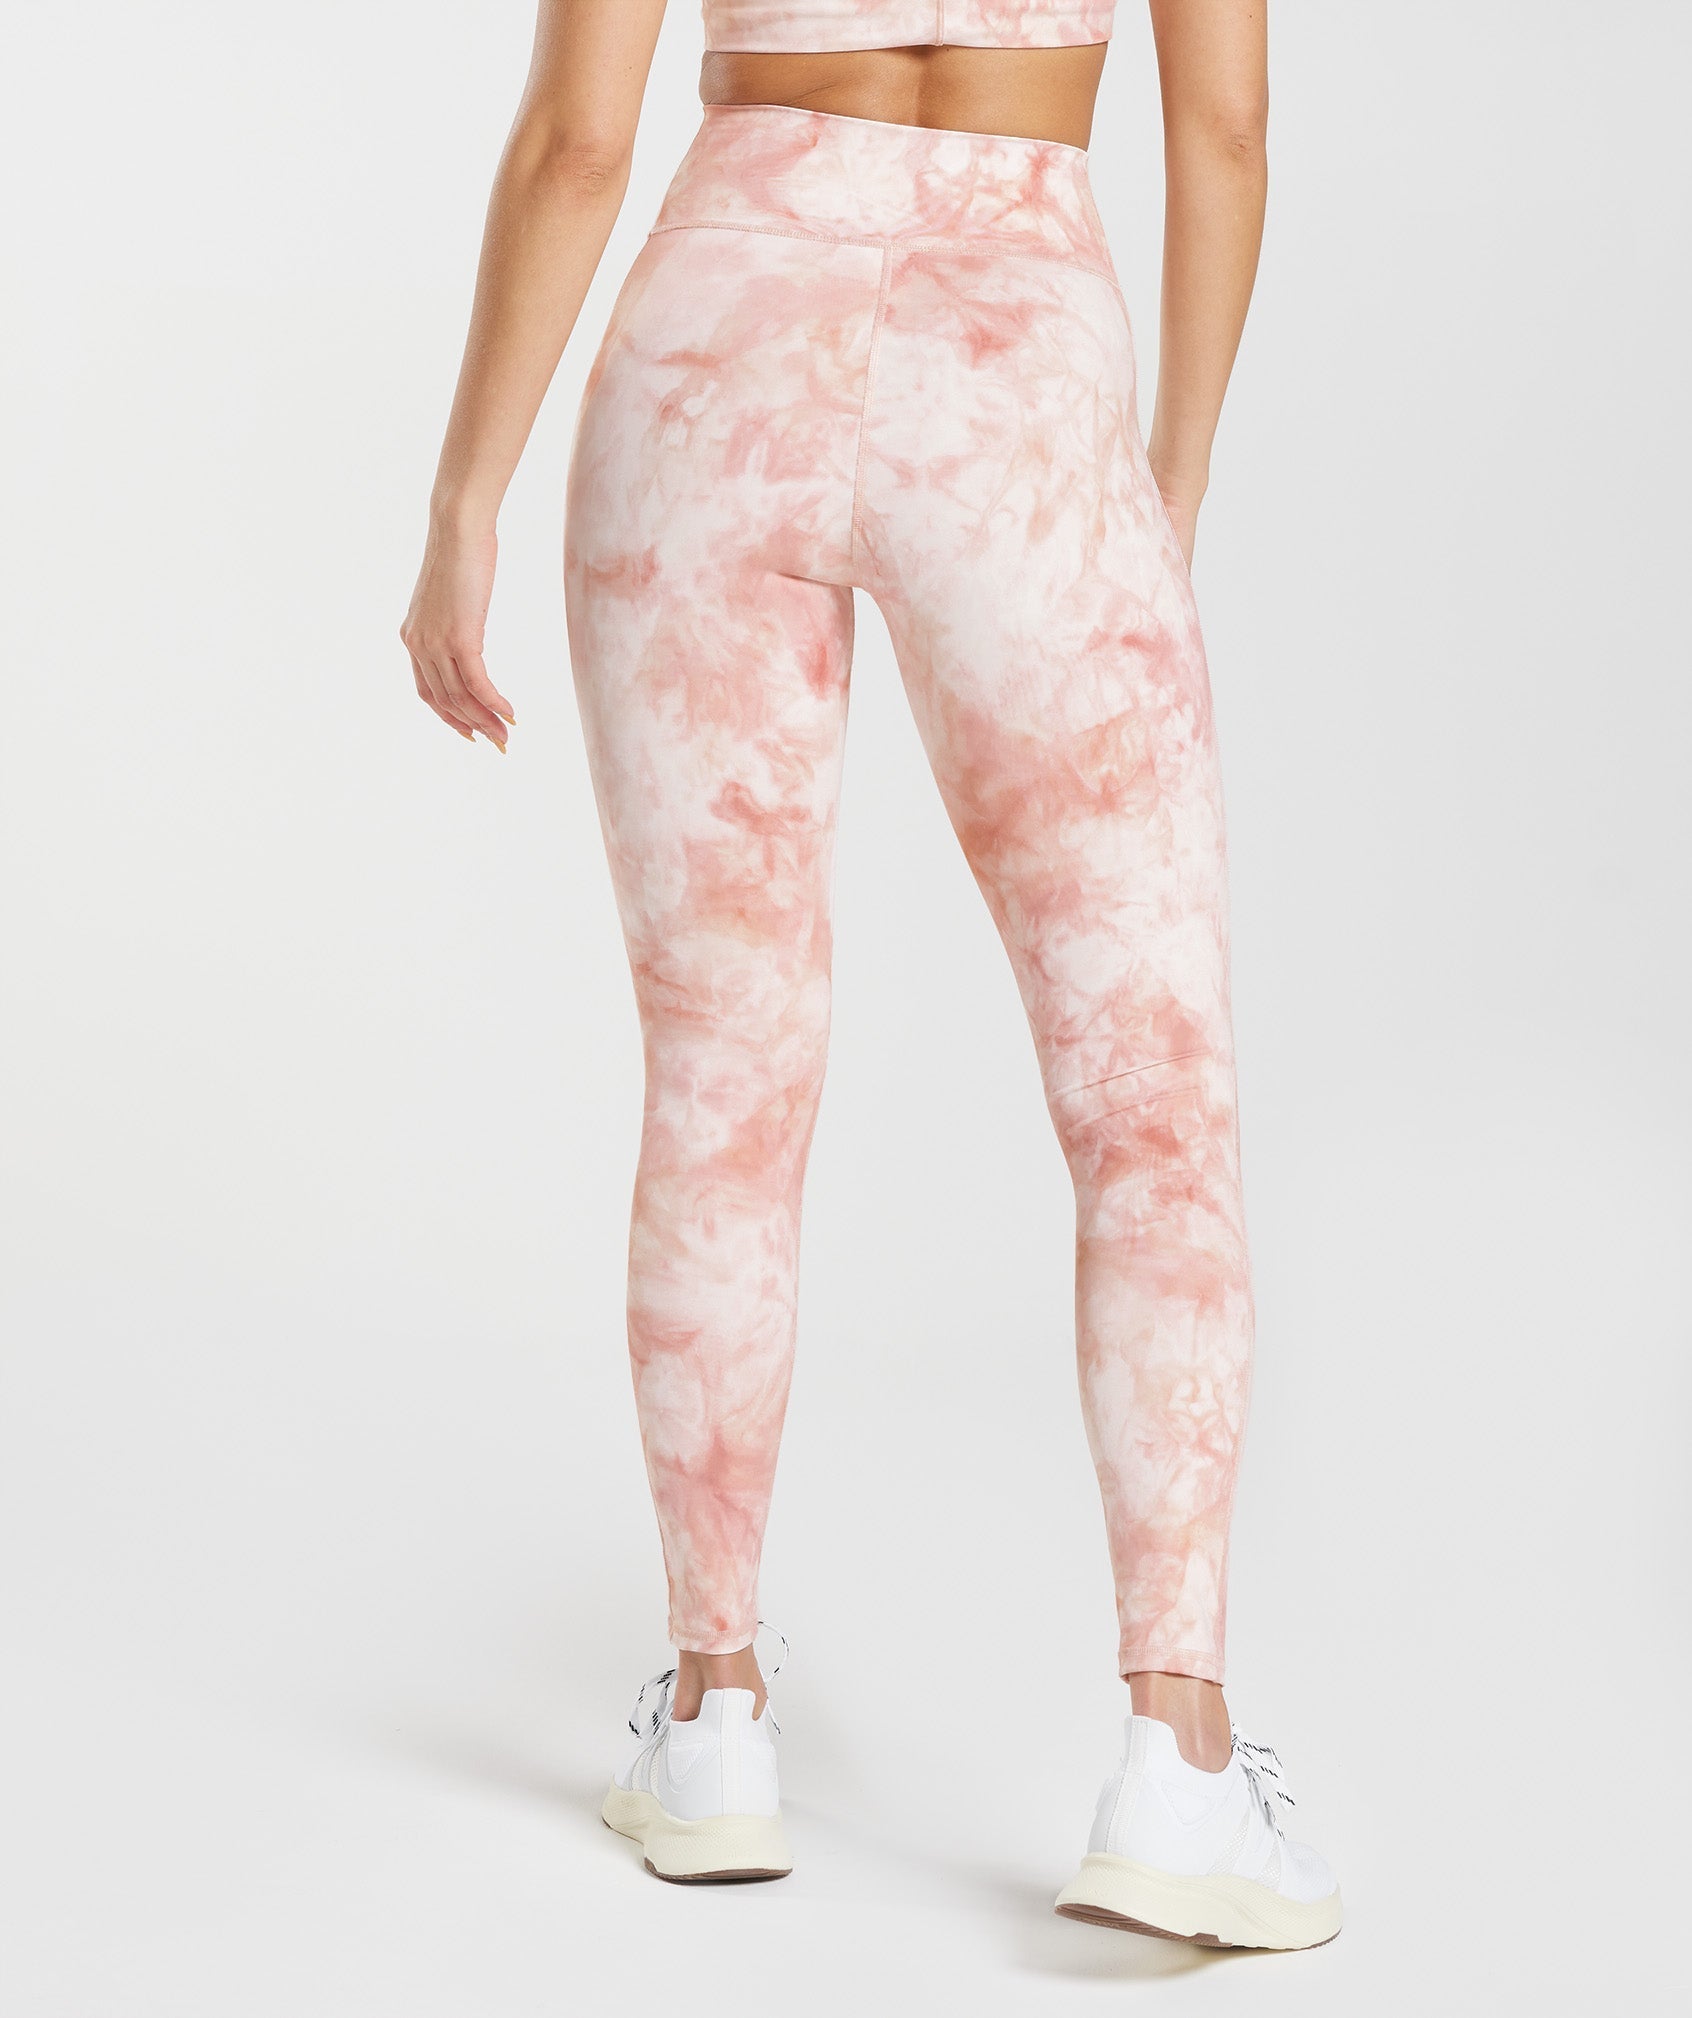 Elevate Spray Dye Leggings in White/Misty Pink/Scandi Pink - view 2